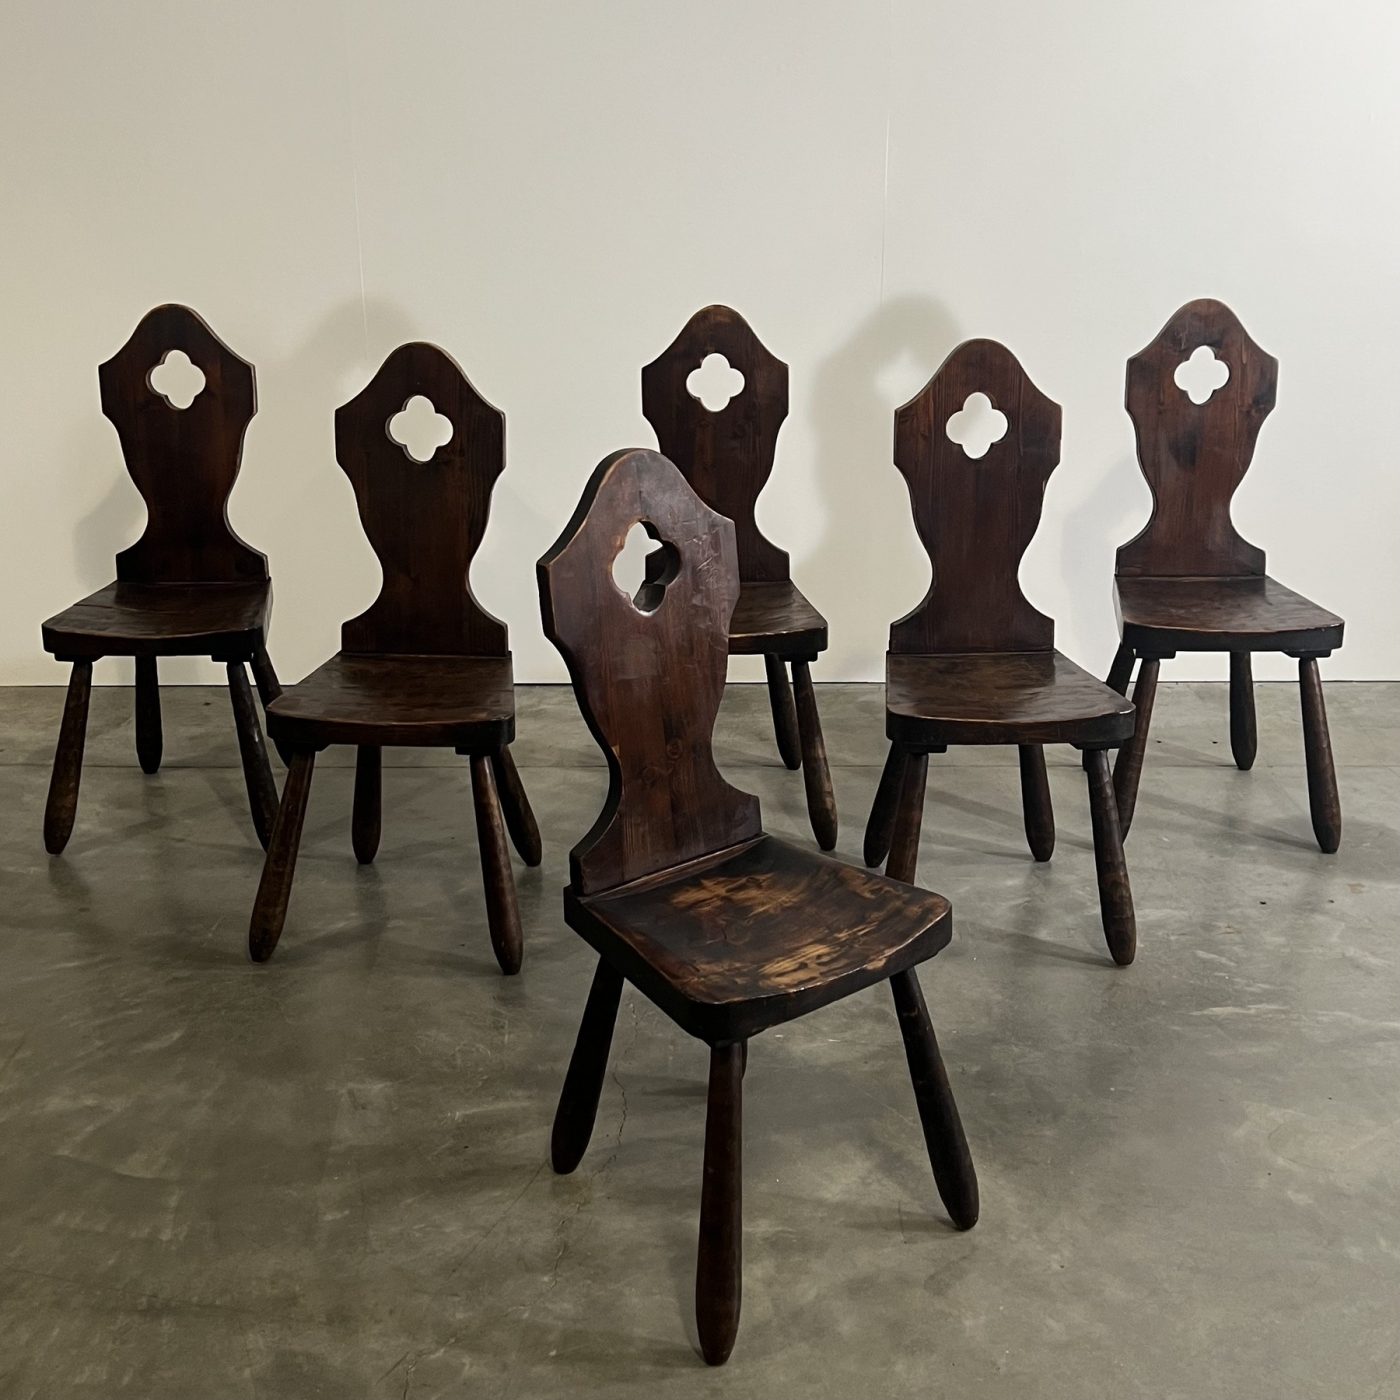 objet-vagabond-rustic-chairs0003